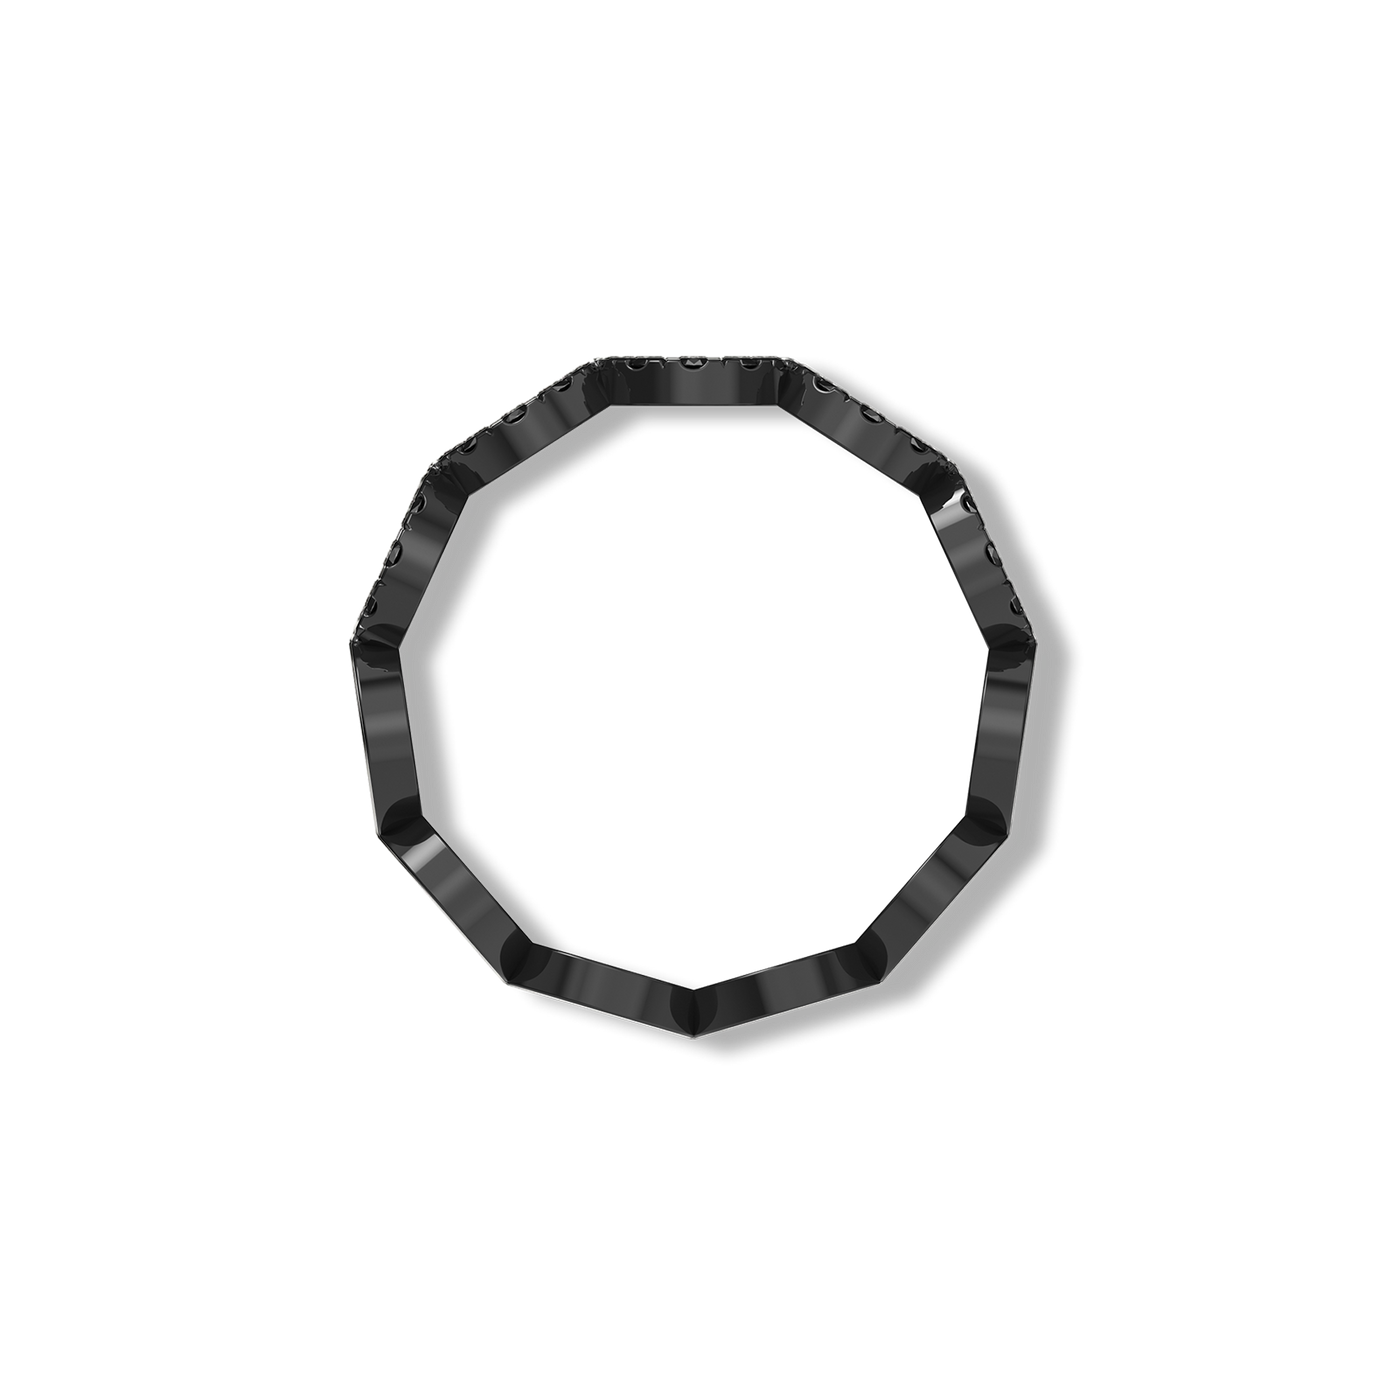 Centric Circular Diamond Ring